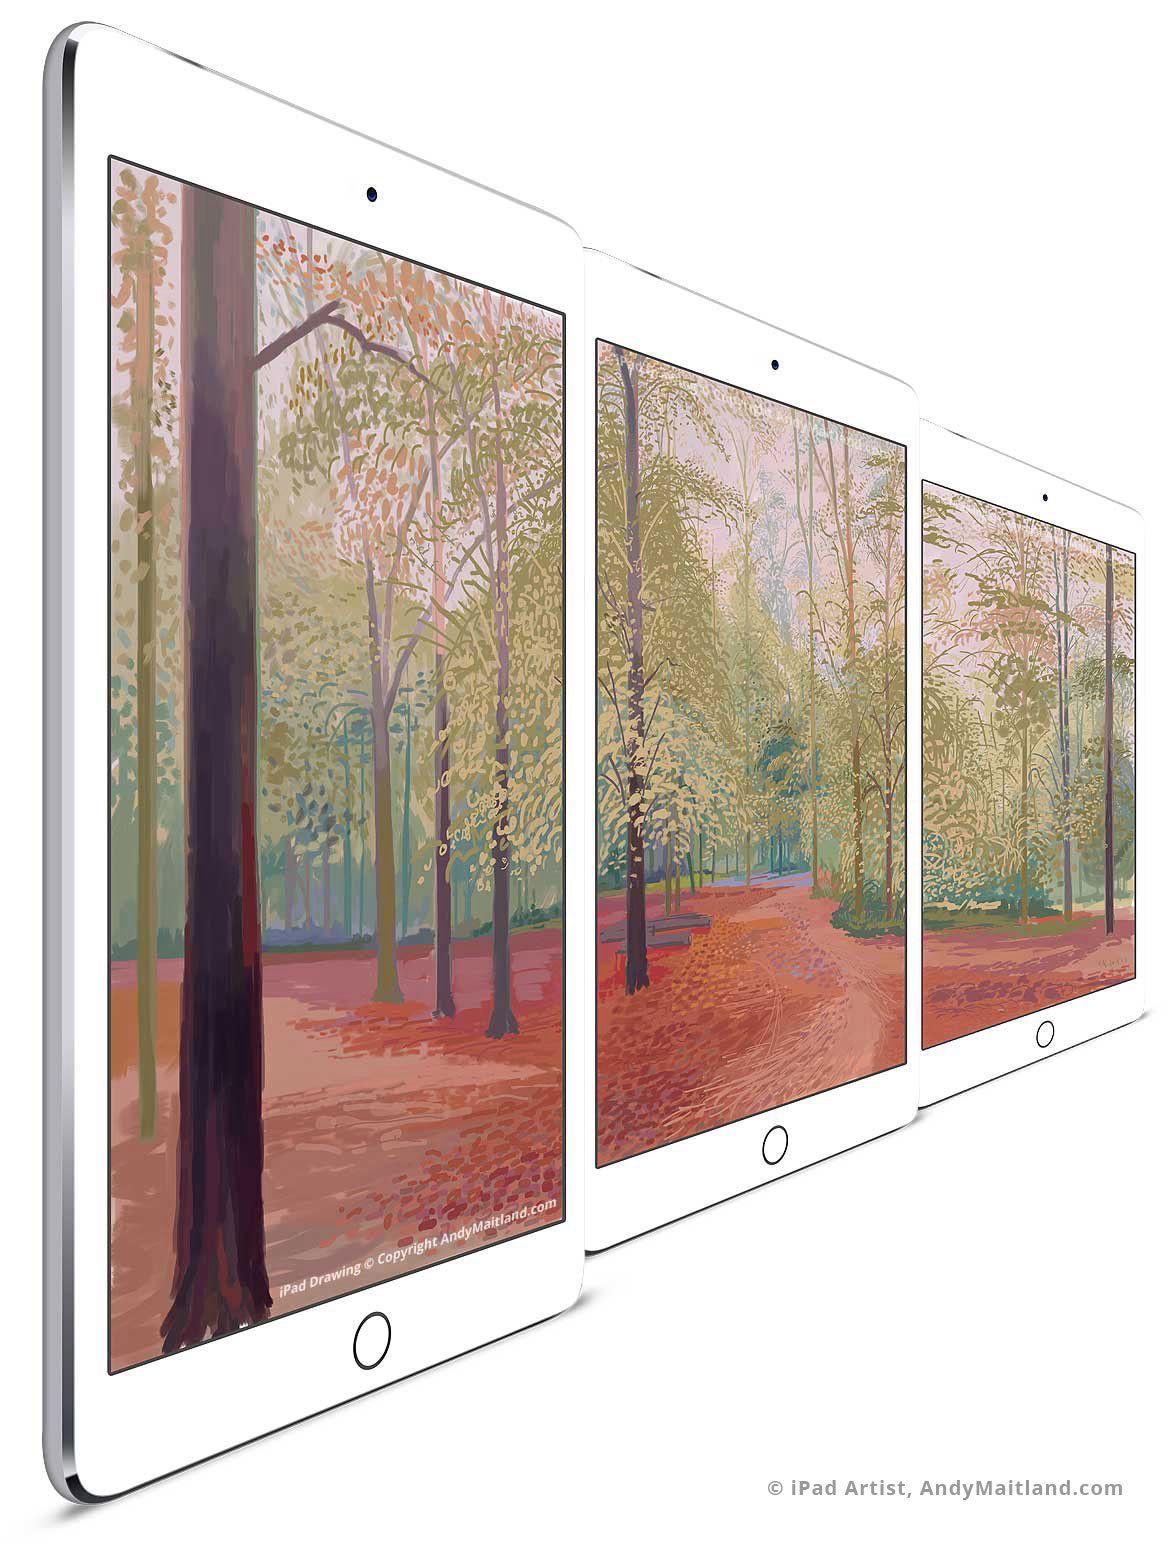 Video. Andy Maitland, iPad artist, making bigger iPad drawings across multiple iPad canvases 2013.